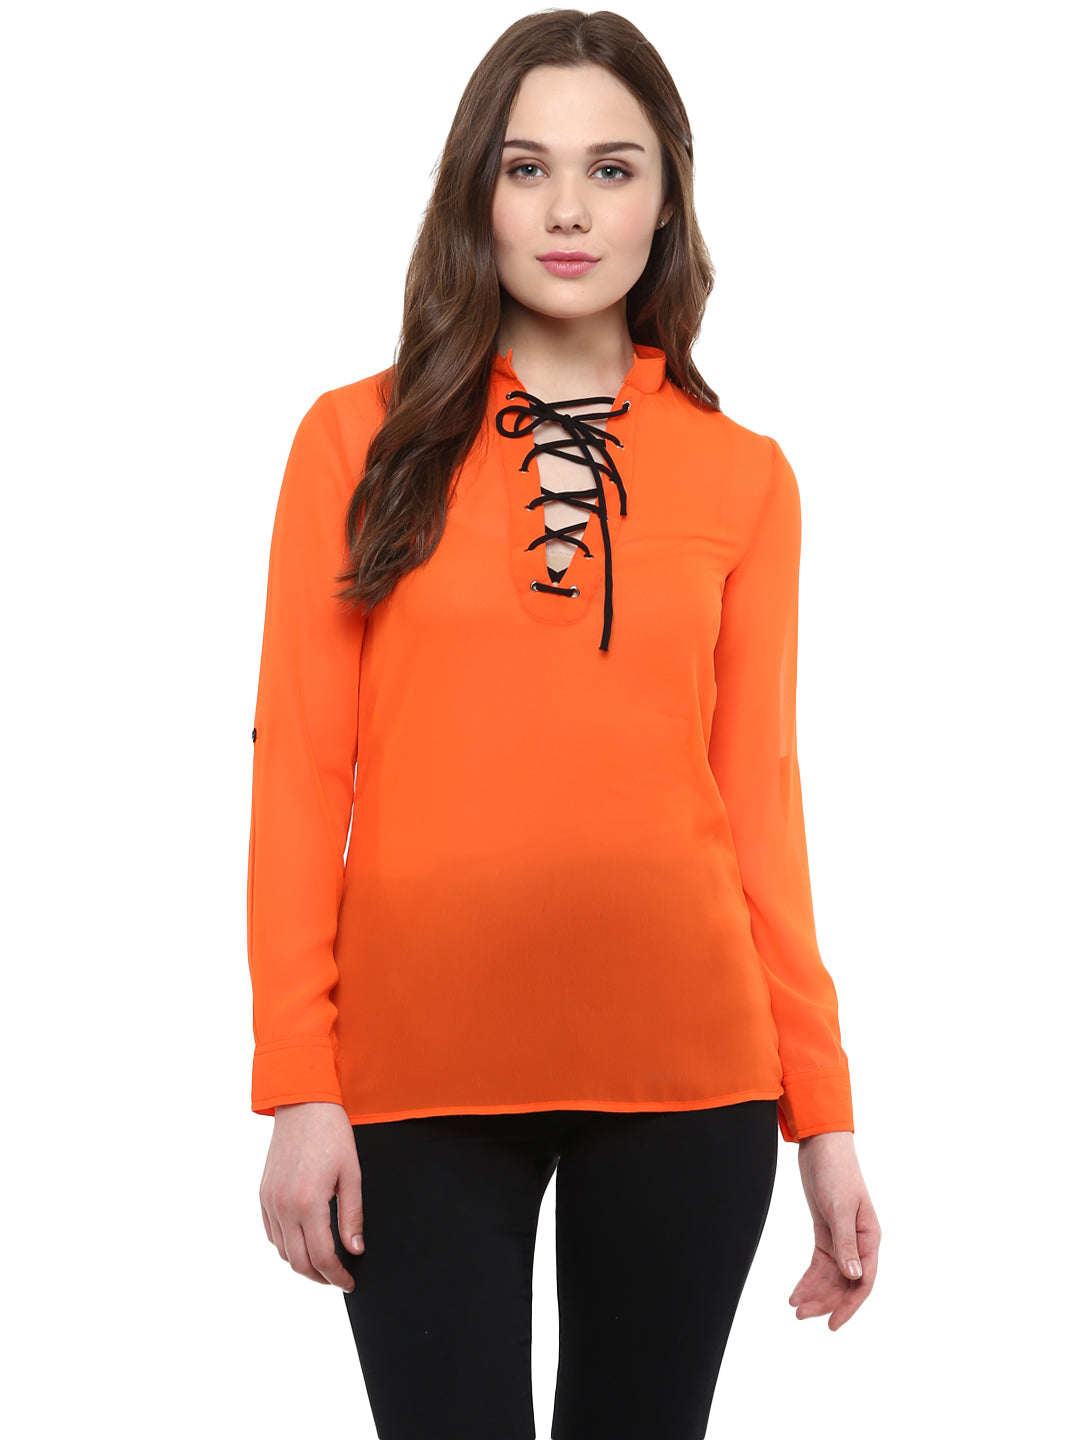 Women's  Orange Georgette Top with Black Lace Up - StyleStone